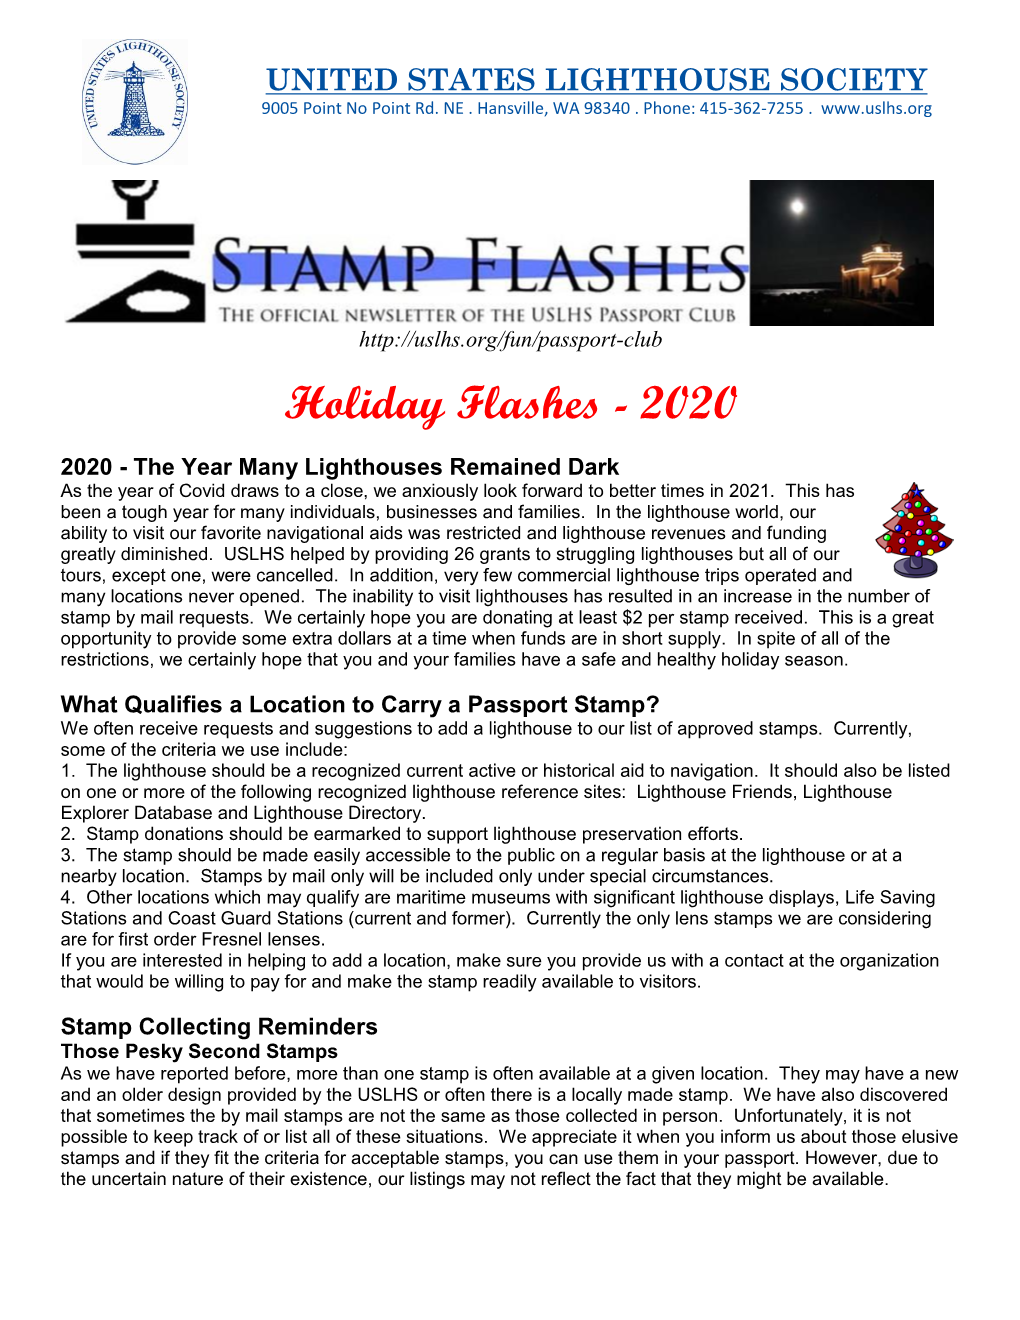 Holiday Flashes - 2020